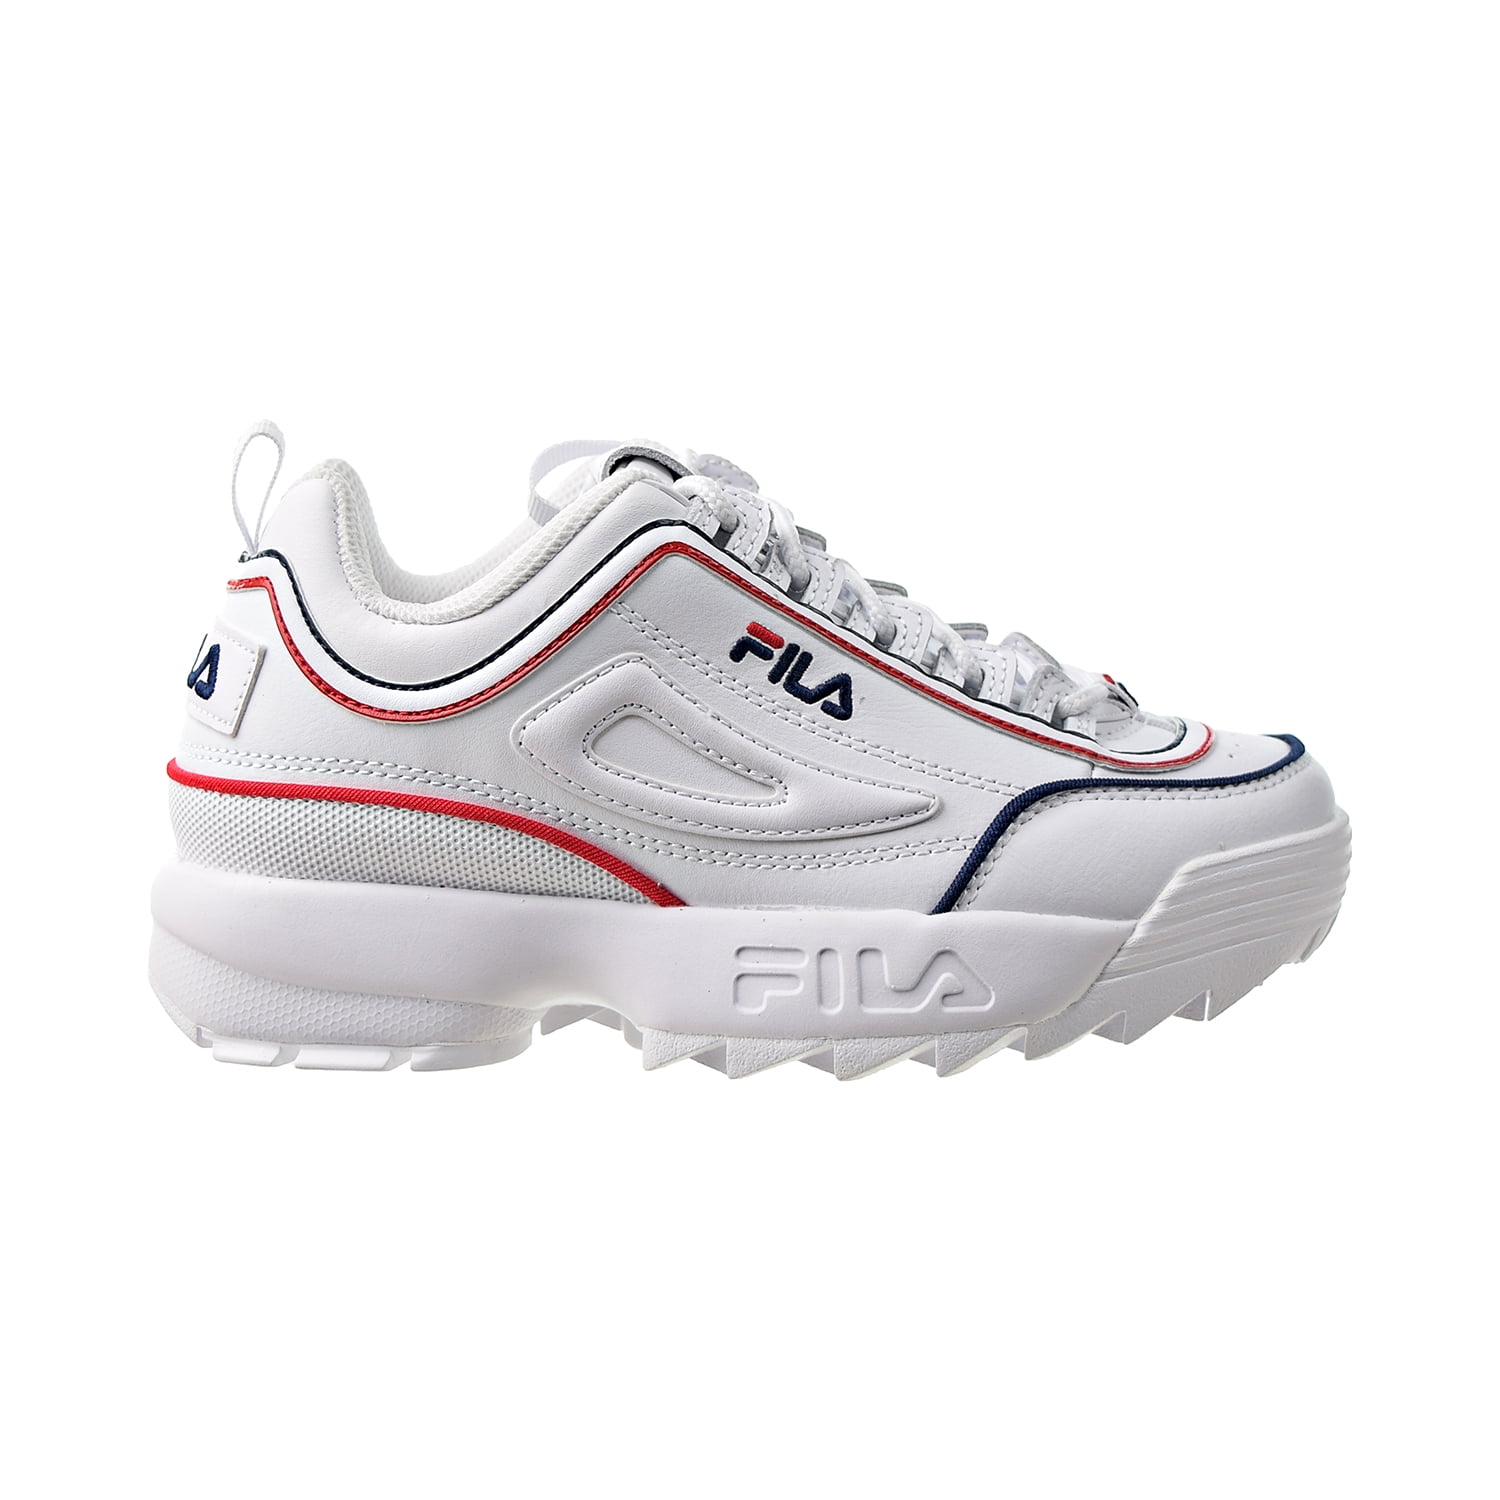 Fila II Contrast Piping Big Shoes White-Navy-Red Walmart.com